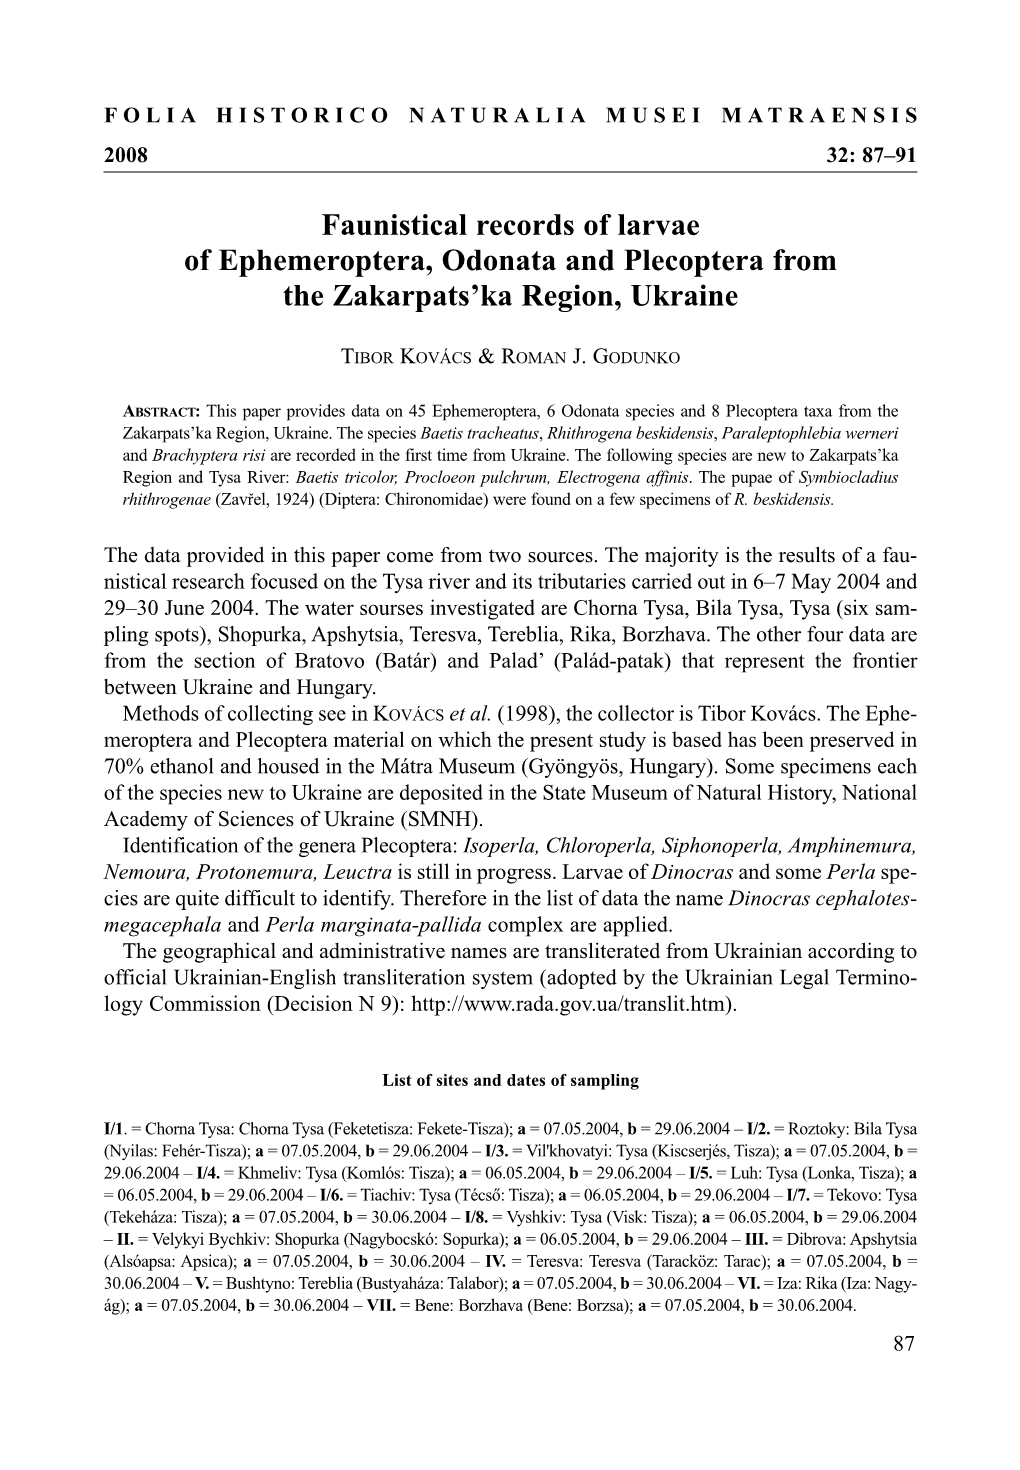 Faunistical Records of Larvae of Ephemeroptera, Odonata and Plecoptera from the Zakarpats’Ka Region, Ukraine